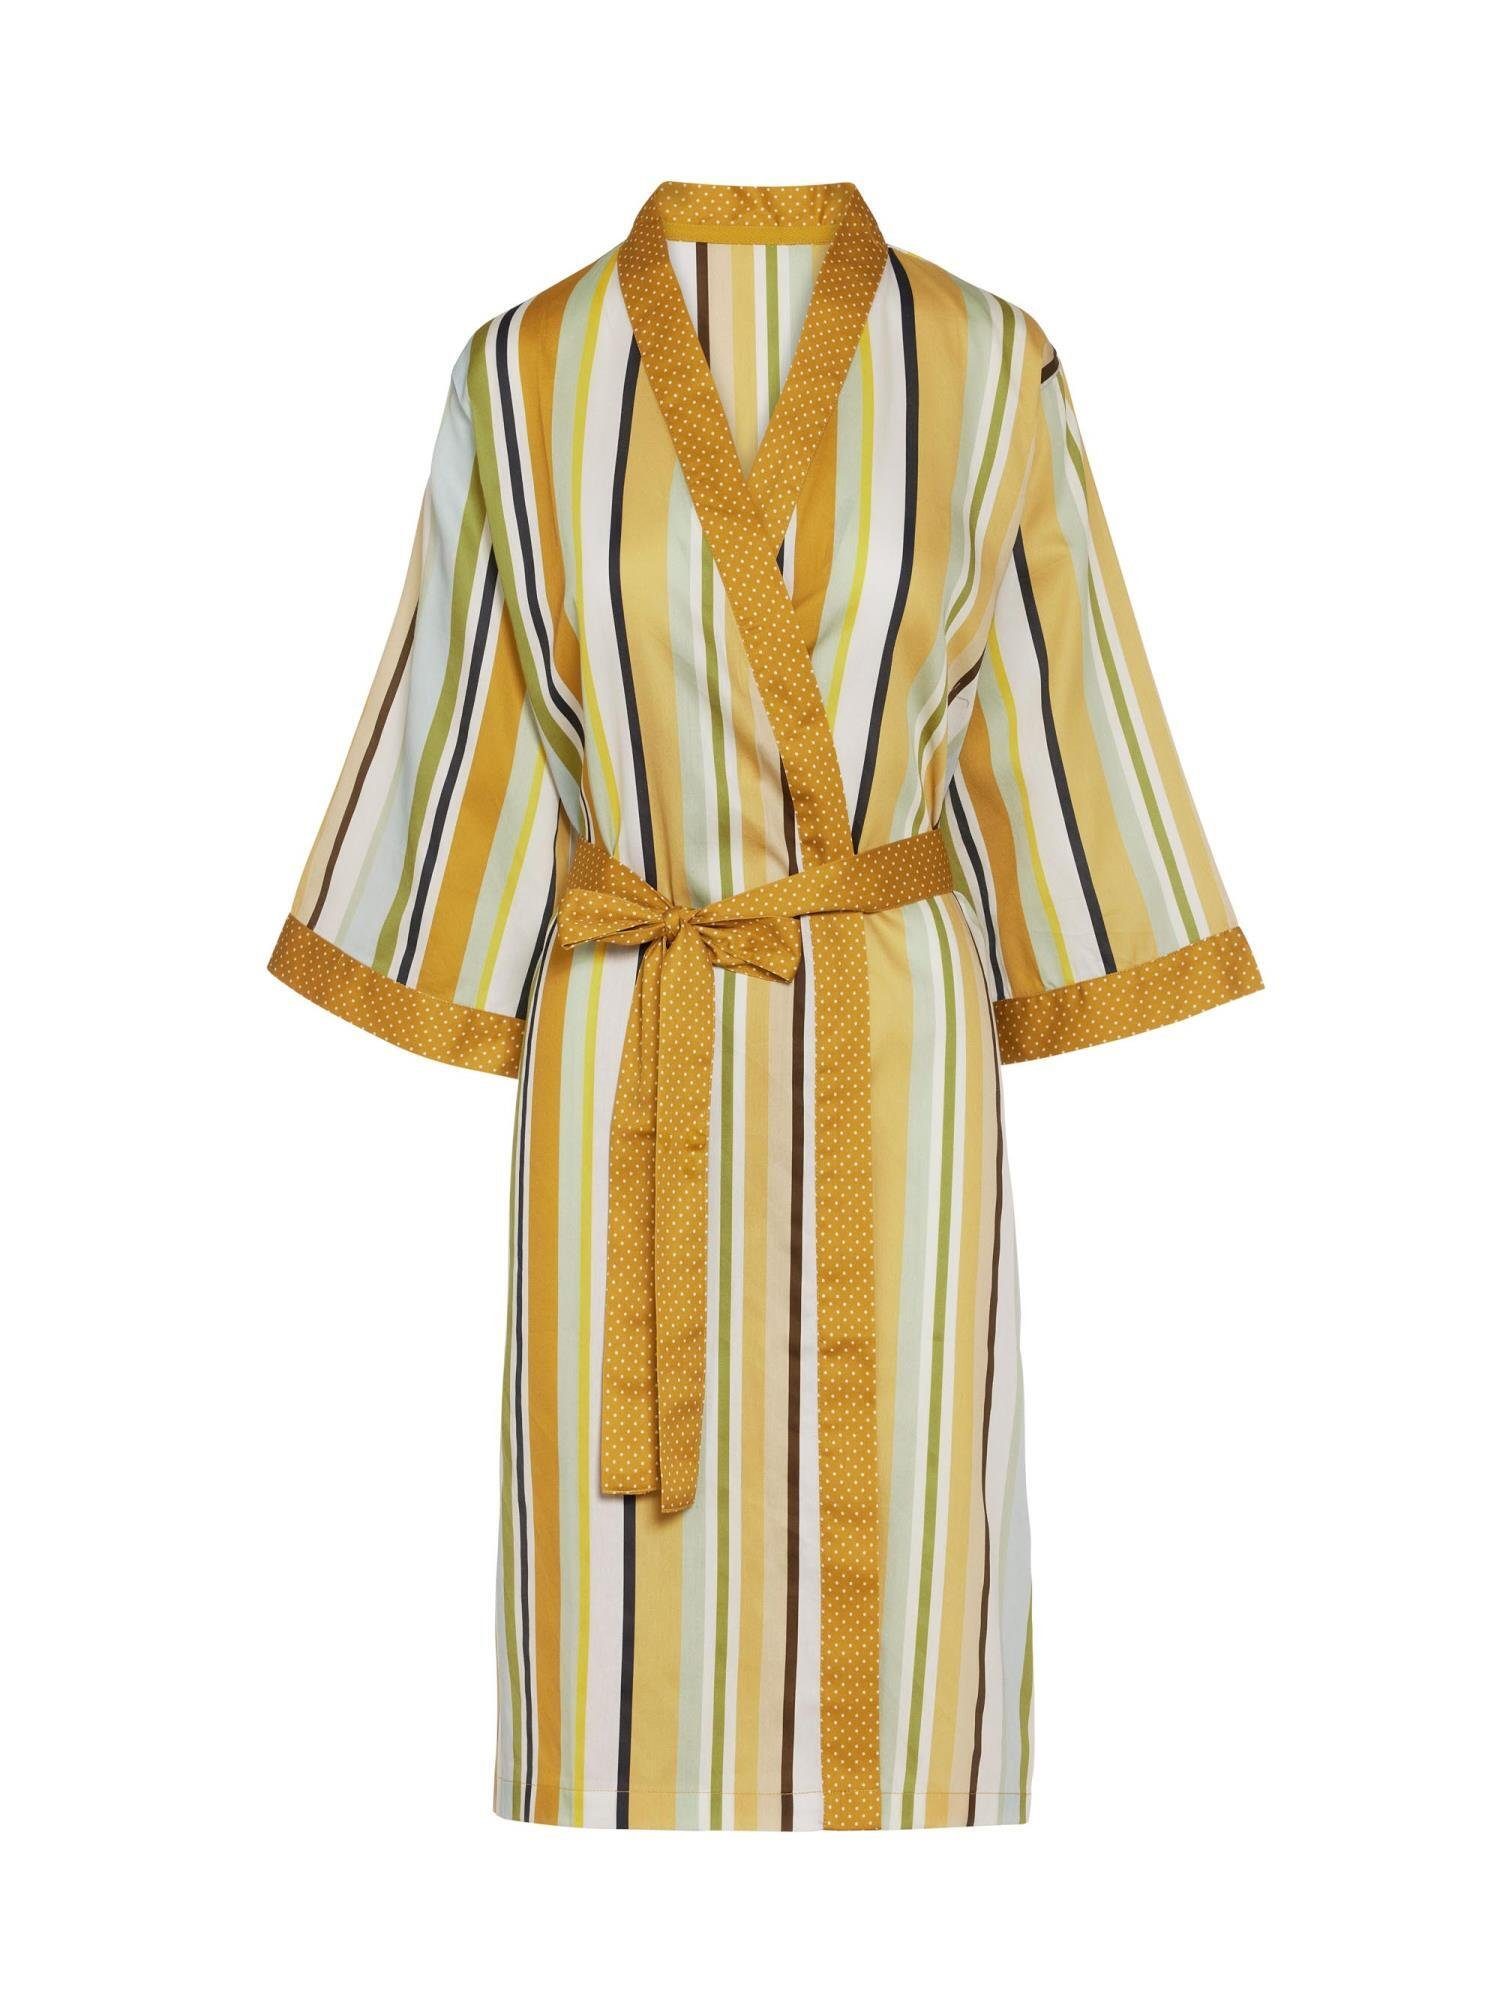 Gürtel, Essenza Sarai Kimono Baumwolle, Kurzform, Feija, Kimono-Kragen, mit Streifen